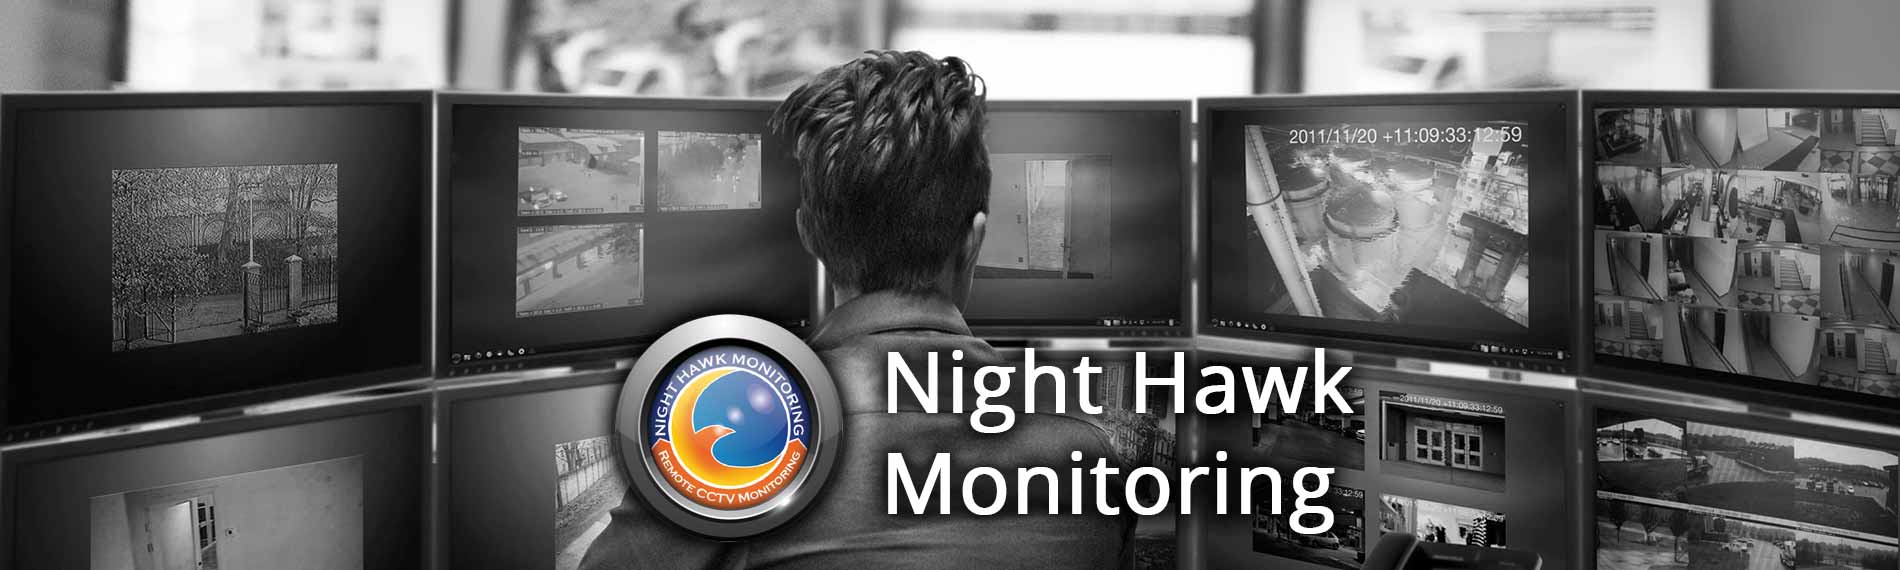 Remote Video Surveillance Boise - Live Security Cameras Monitoring Boise Idaho